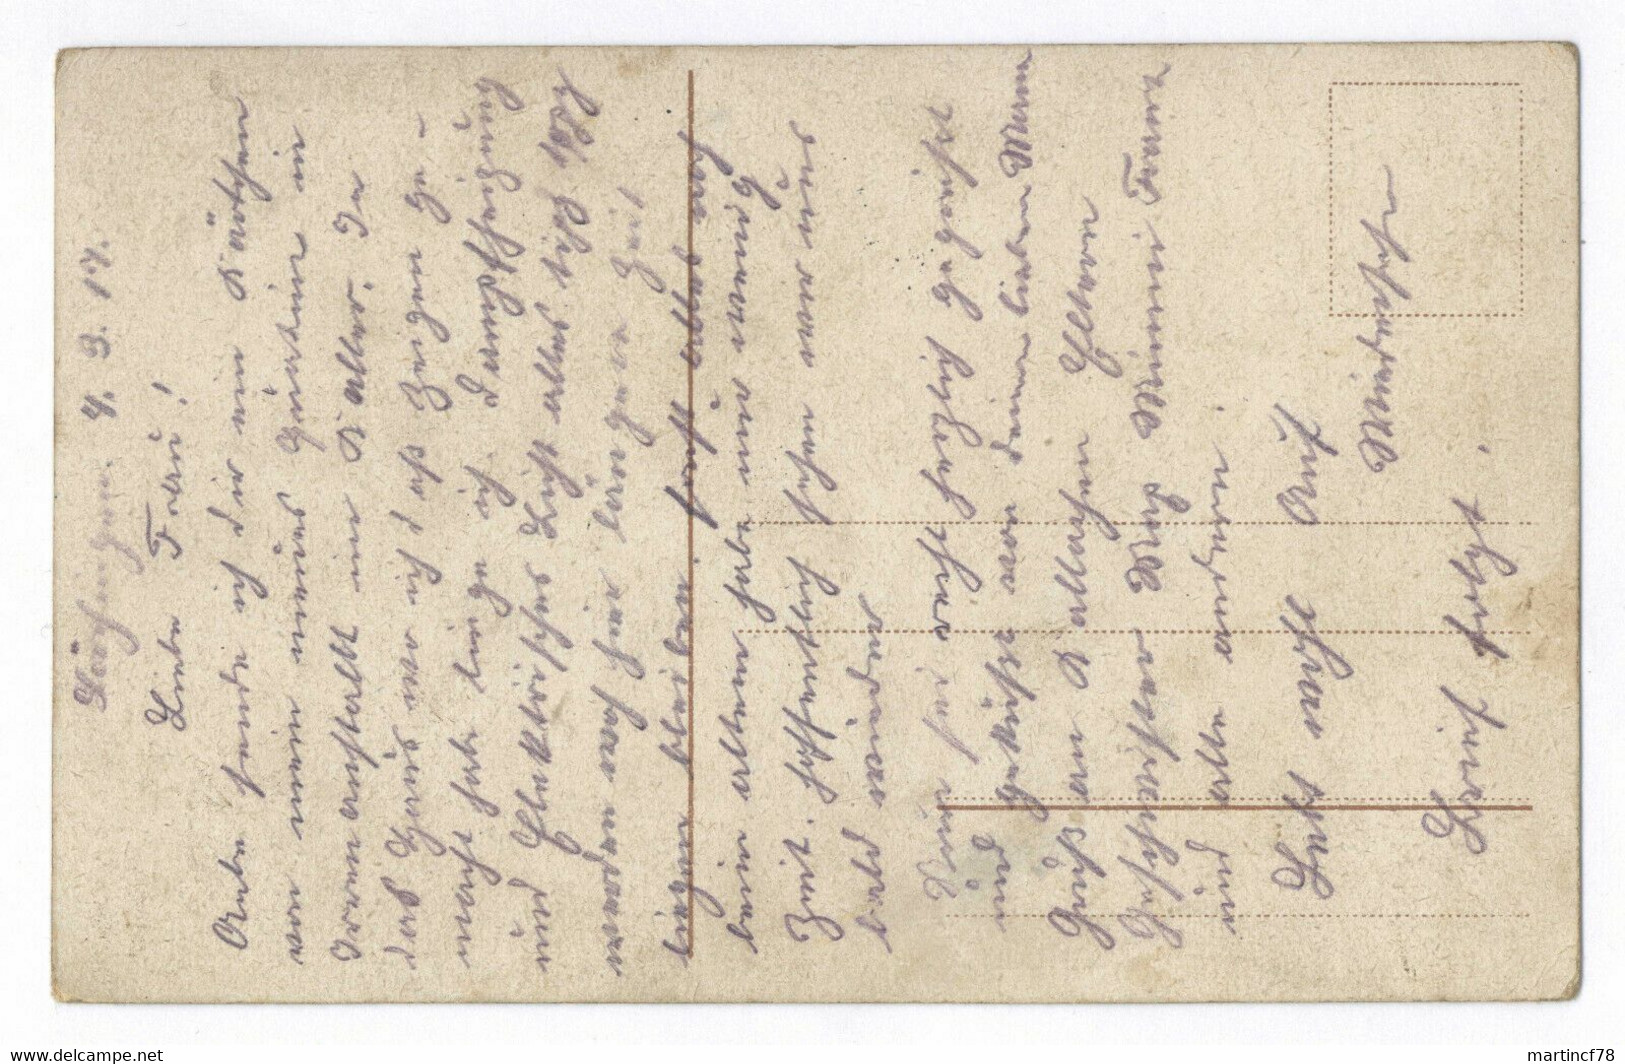 Lörchingen I. Lothringen Bezirks- Heil- Und Pflege-Anstalt 1917 Postkarte - Lorquin